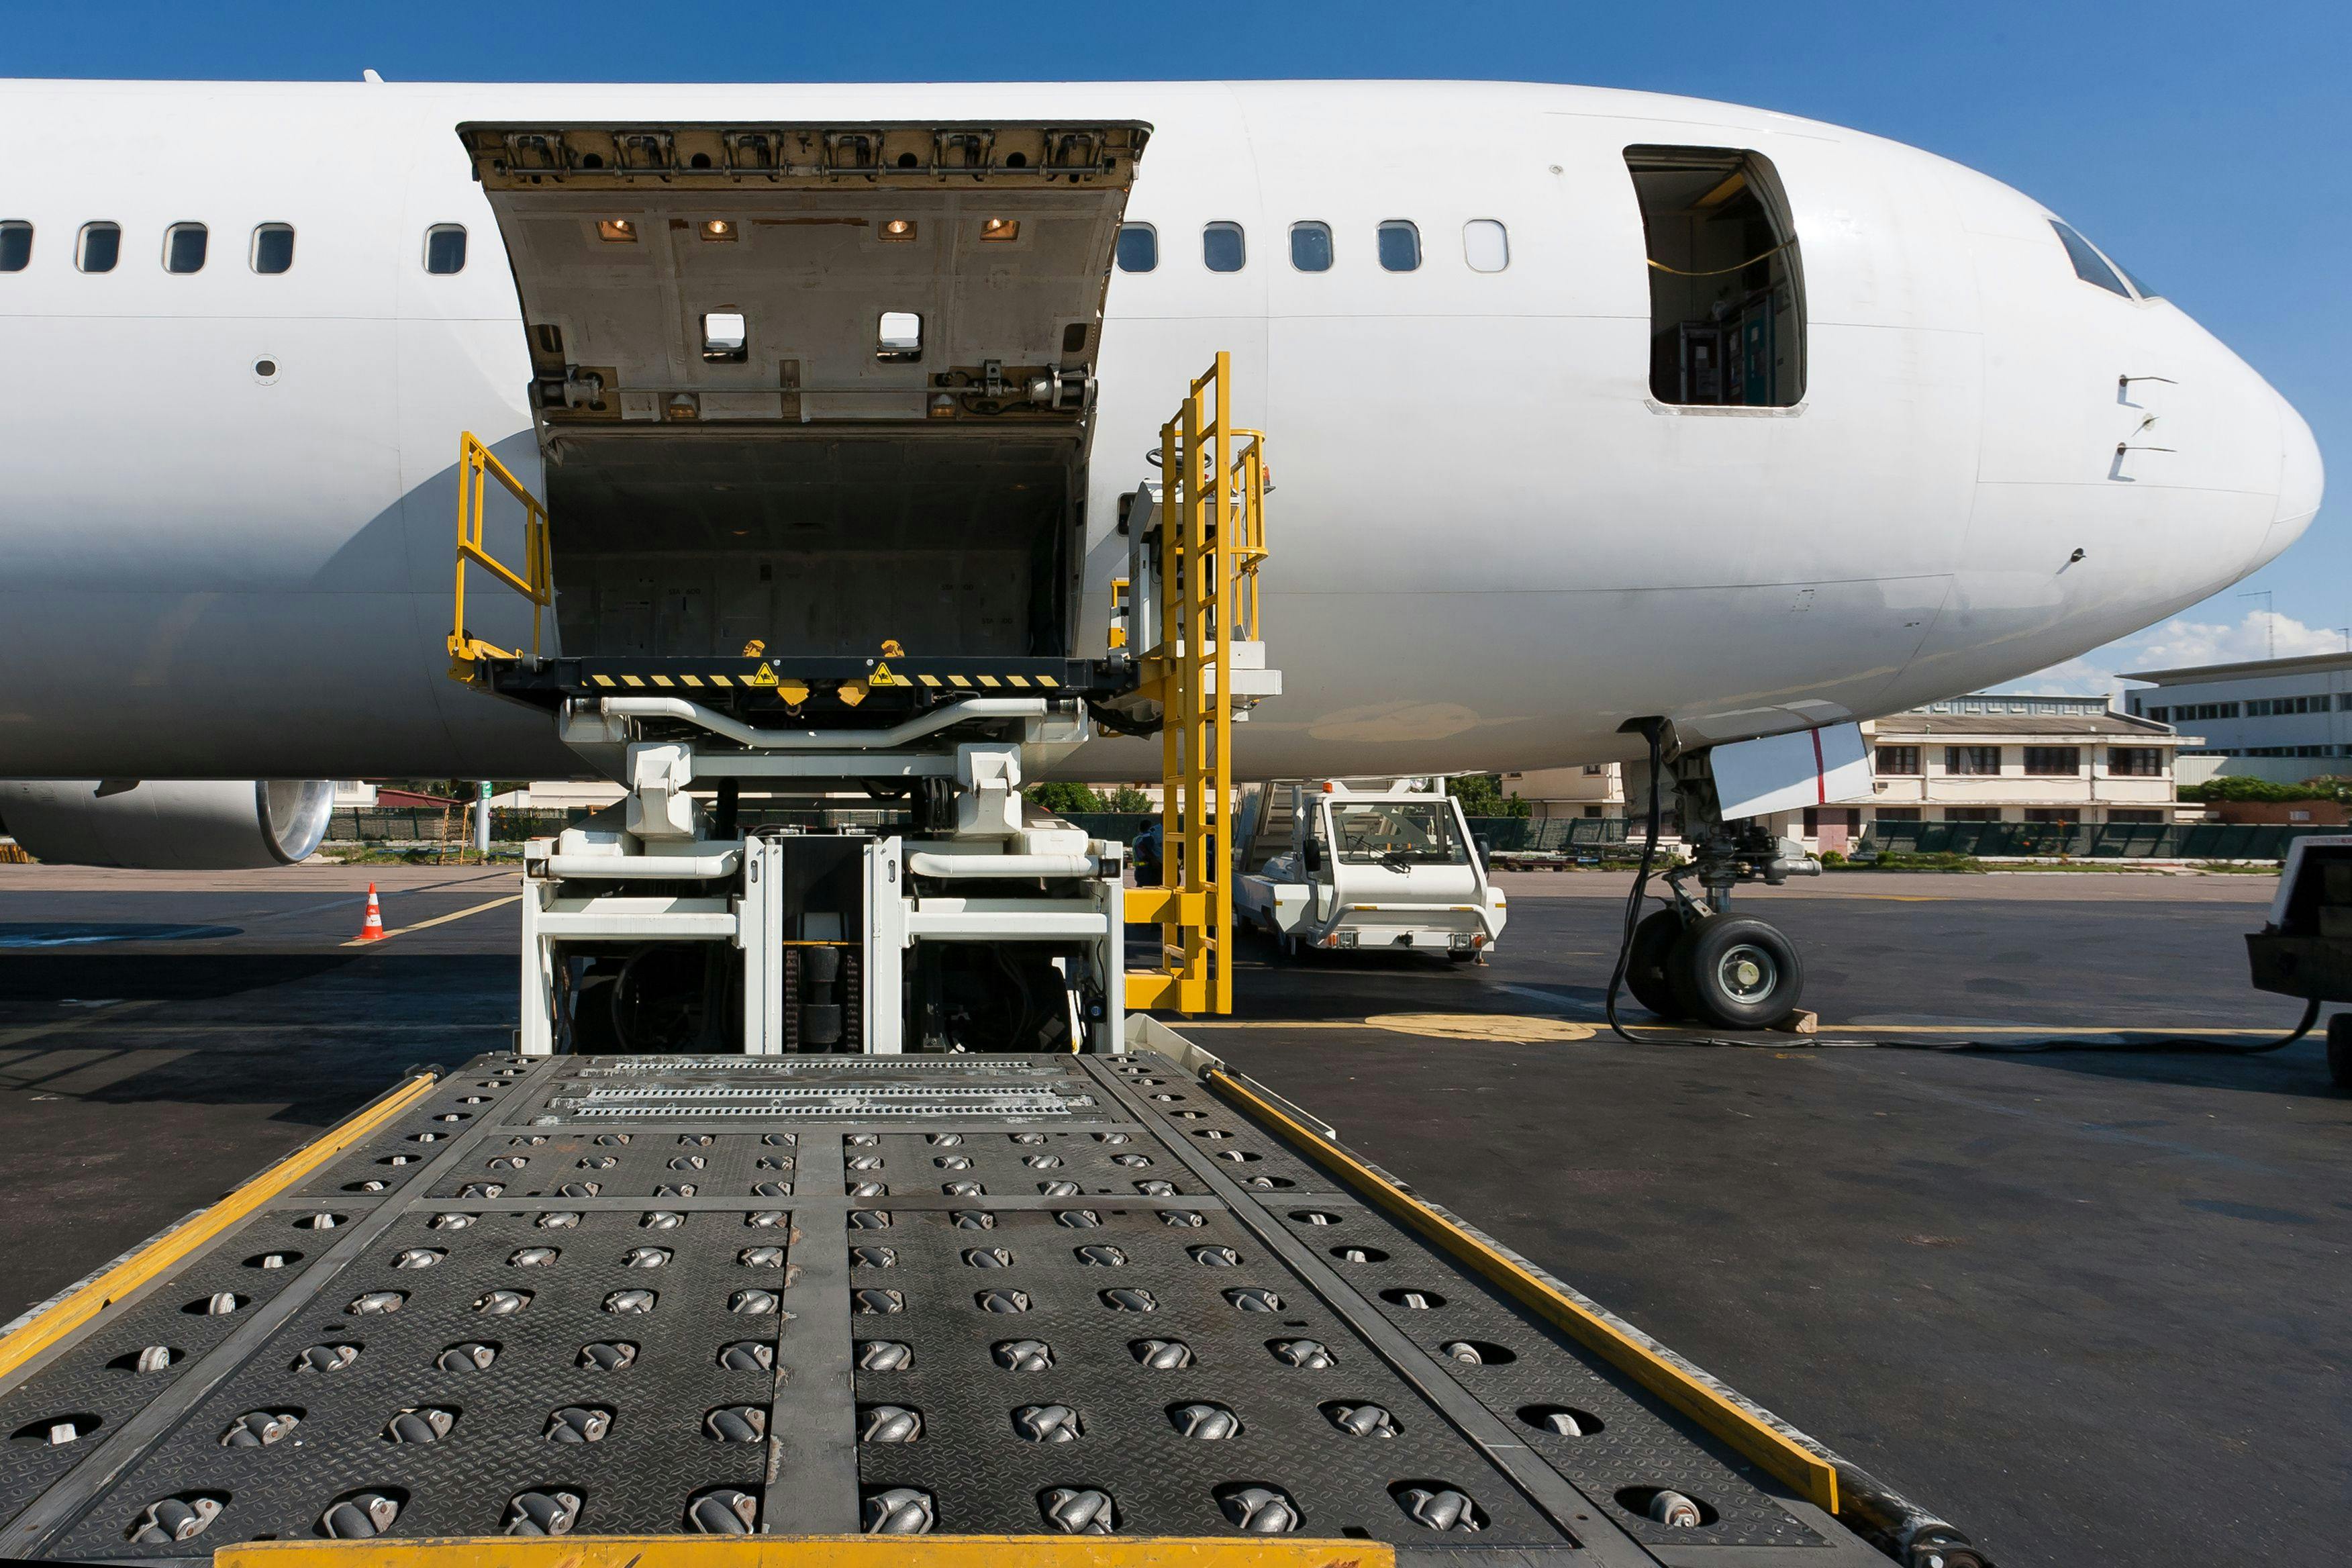 Loading cargo plane. Image Credit: Adobe Stock Images/Pierre-Yves Babelon